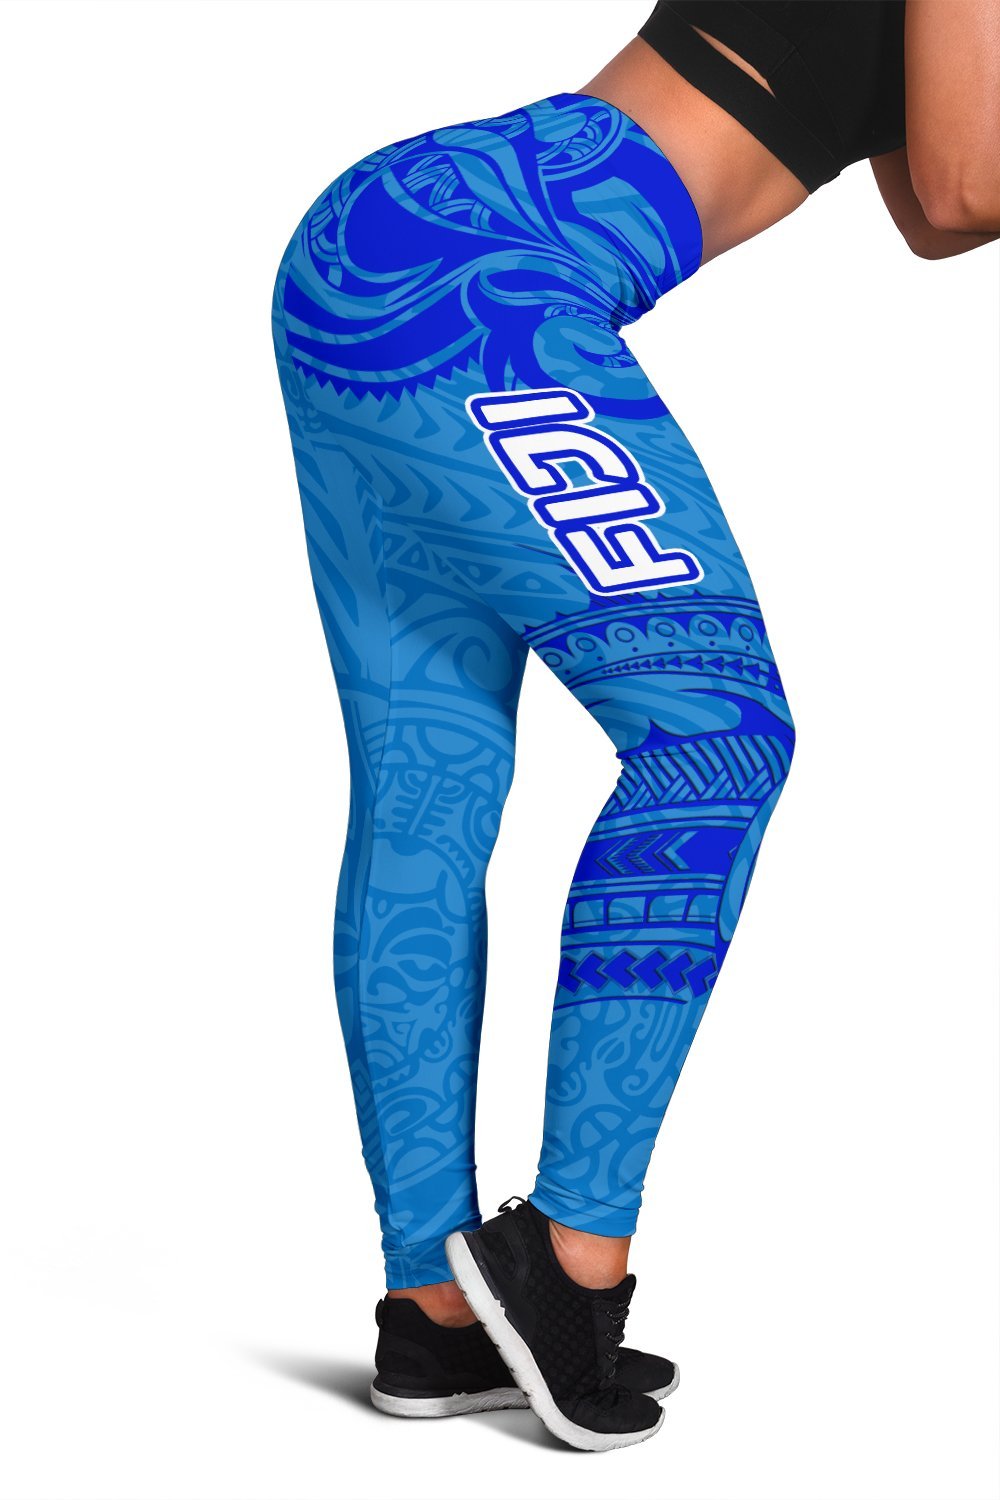 blue-women-leggings-fiji-rugby-polynesian-waves-style